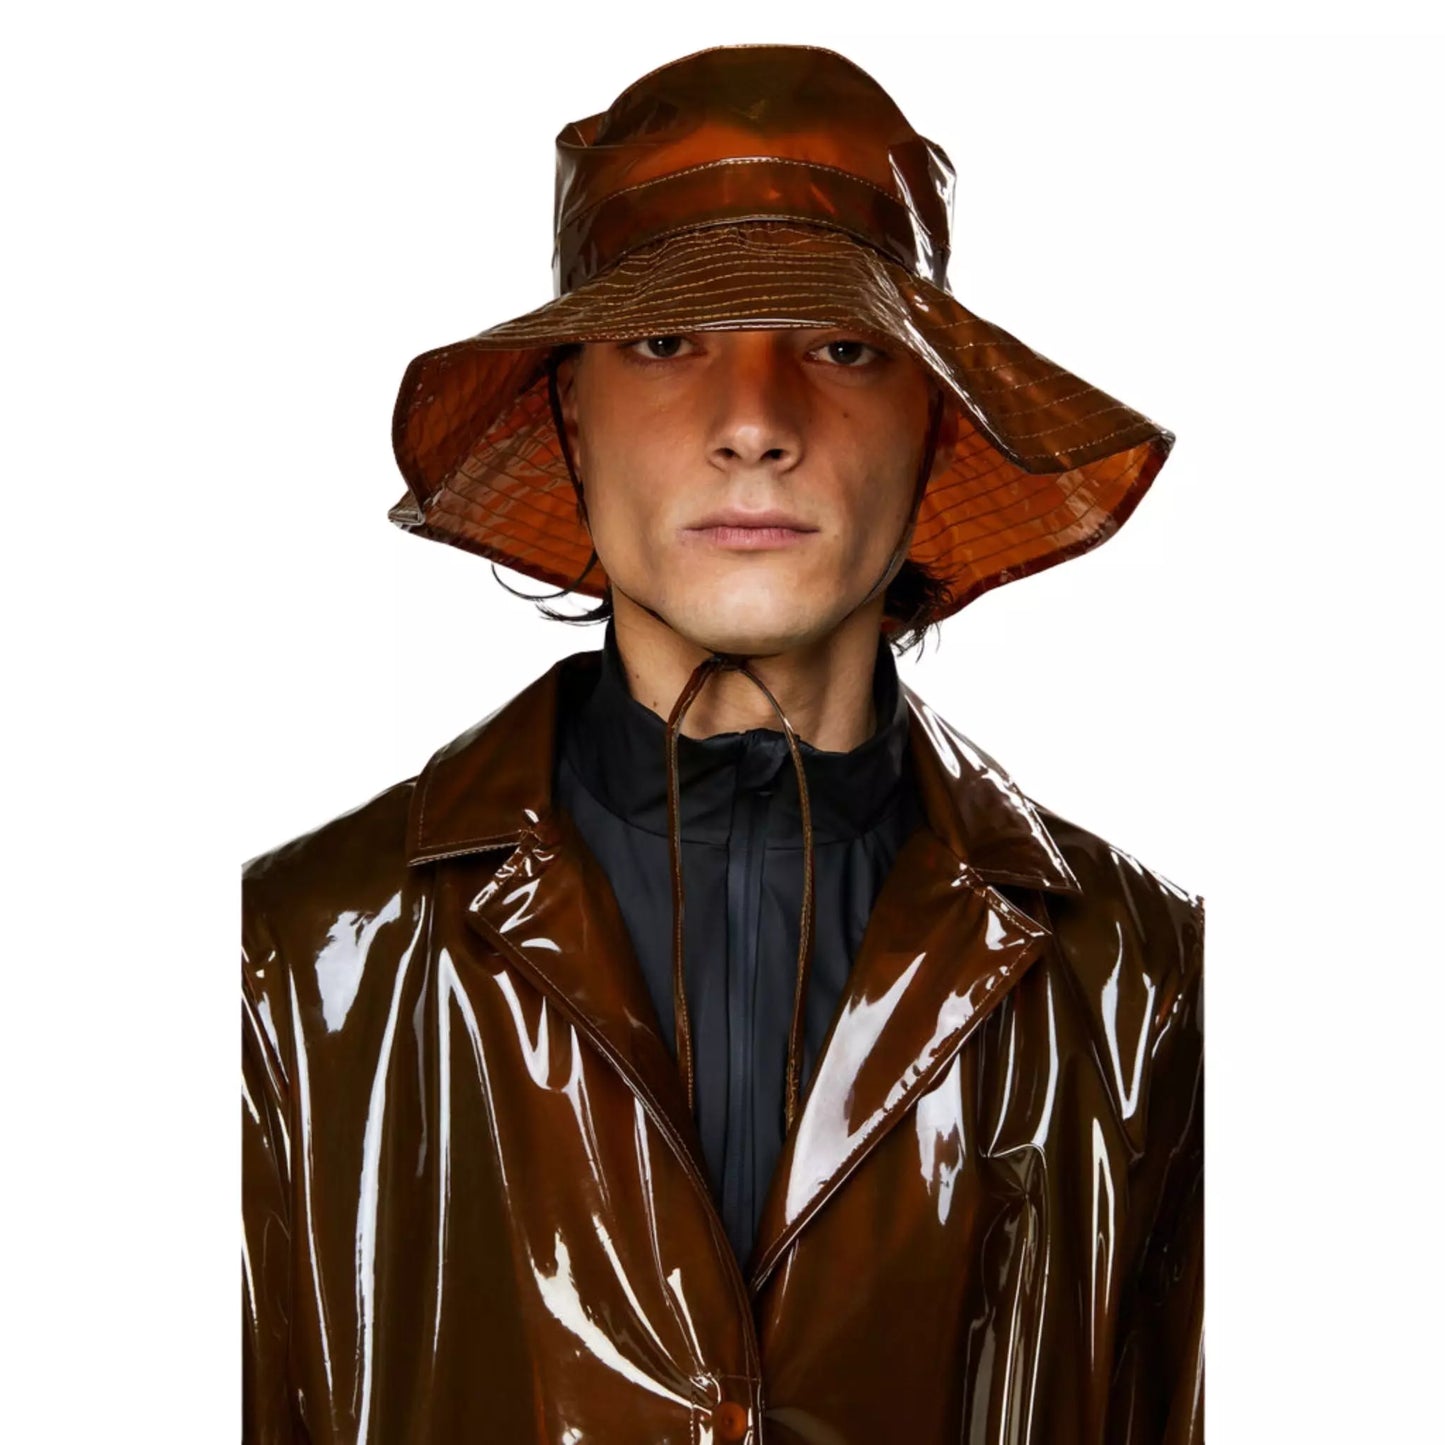 Rains waterproof boonie Hat transparent brown worn by men